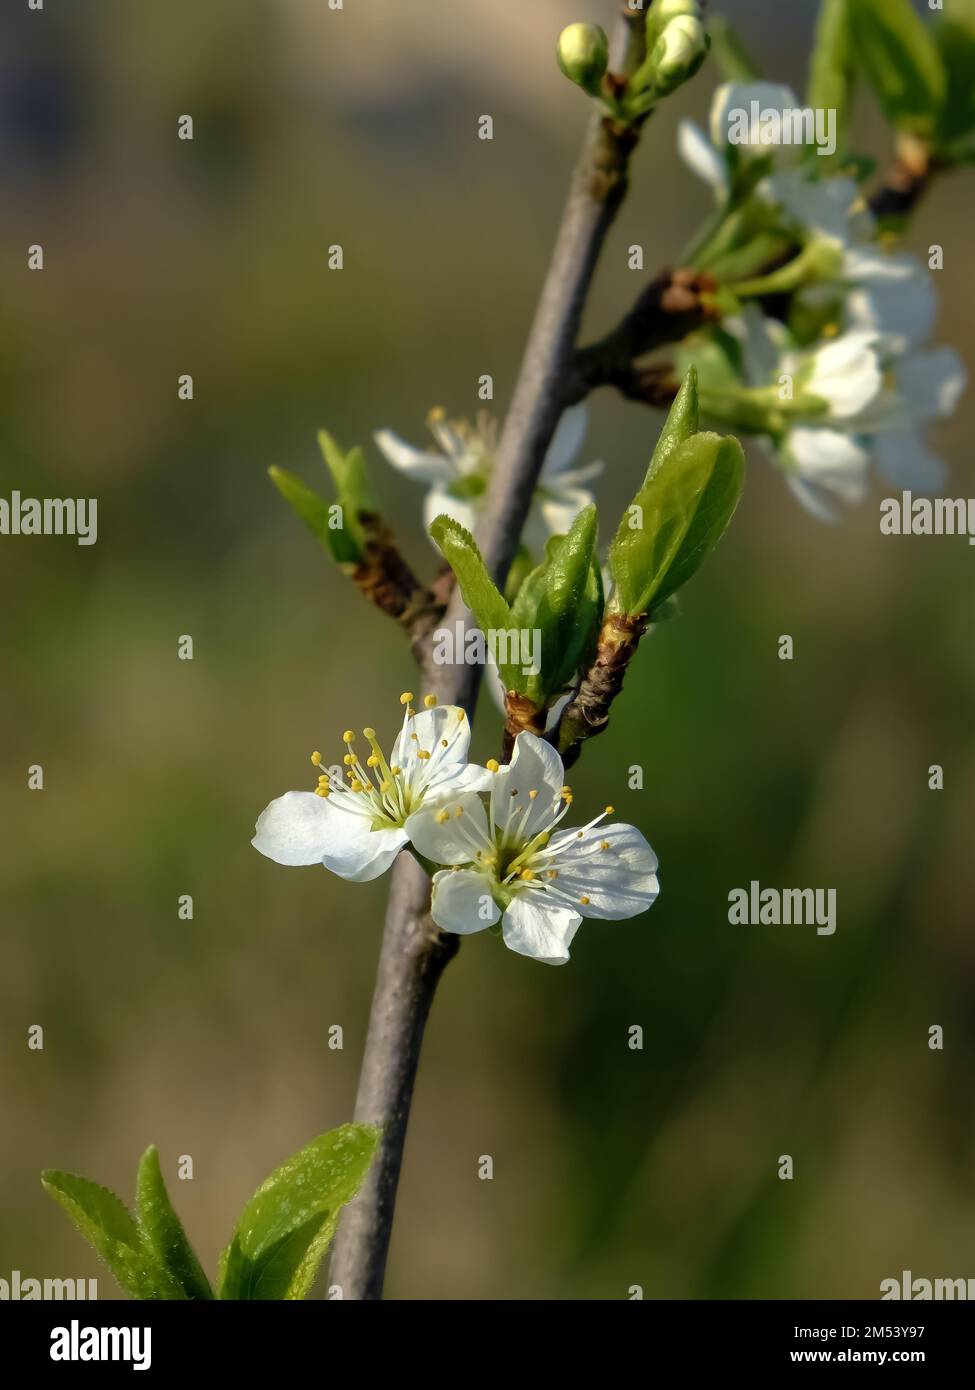 Blossom of Mirabelle plum in detail. Mirabelle plum (Prunus domestica subsp. syriaca) is a cultivar group of plum trees of the genus Prunus. Stock Photo